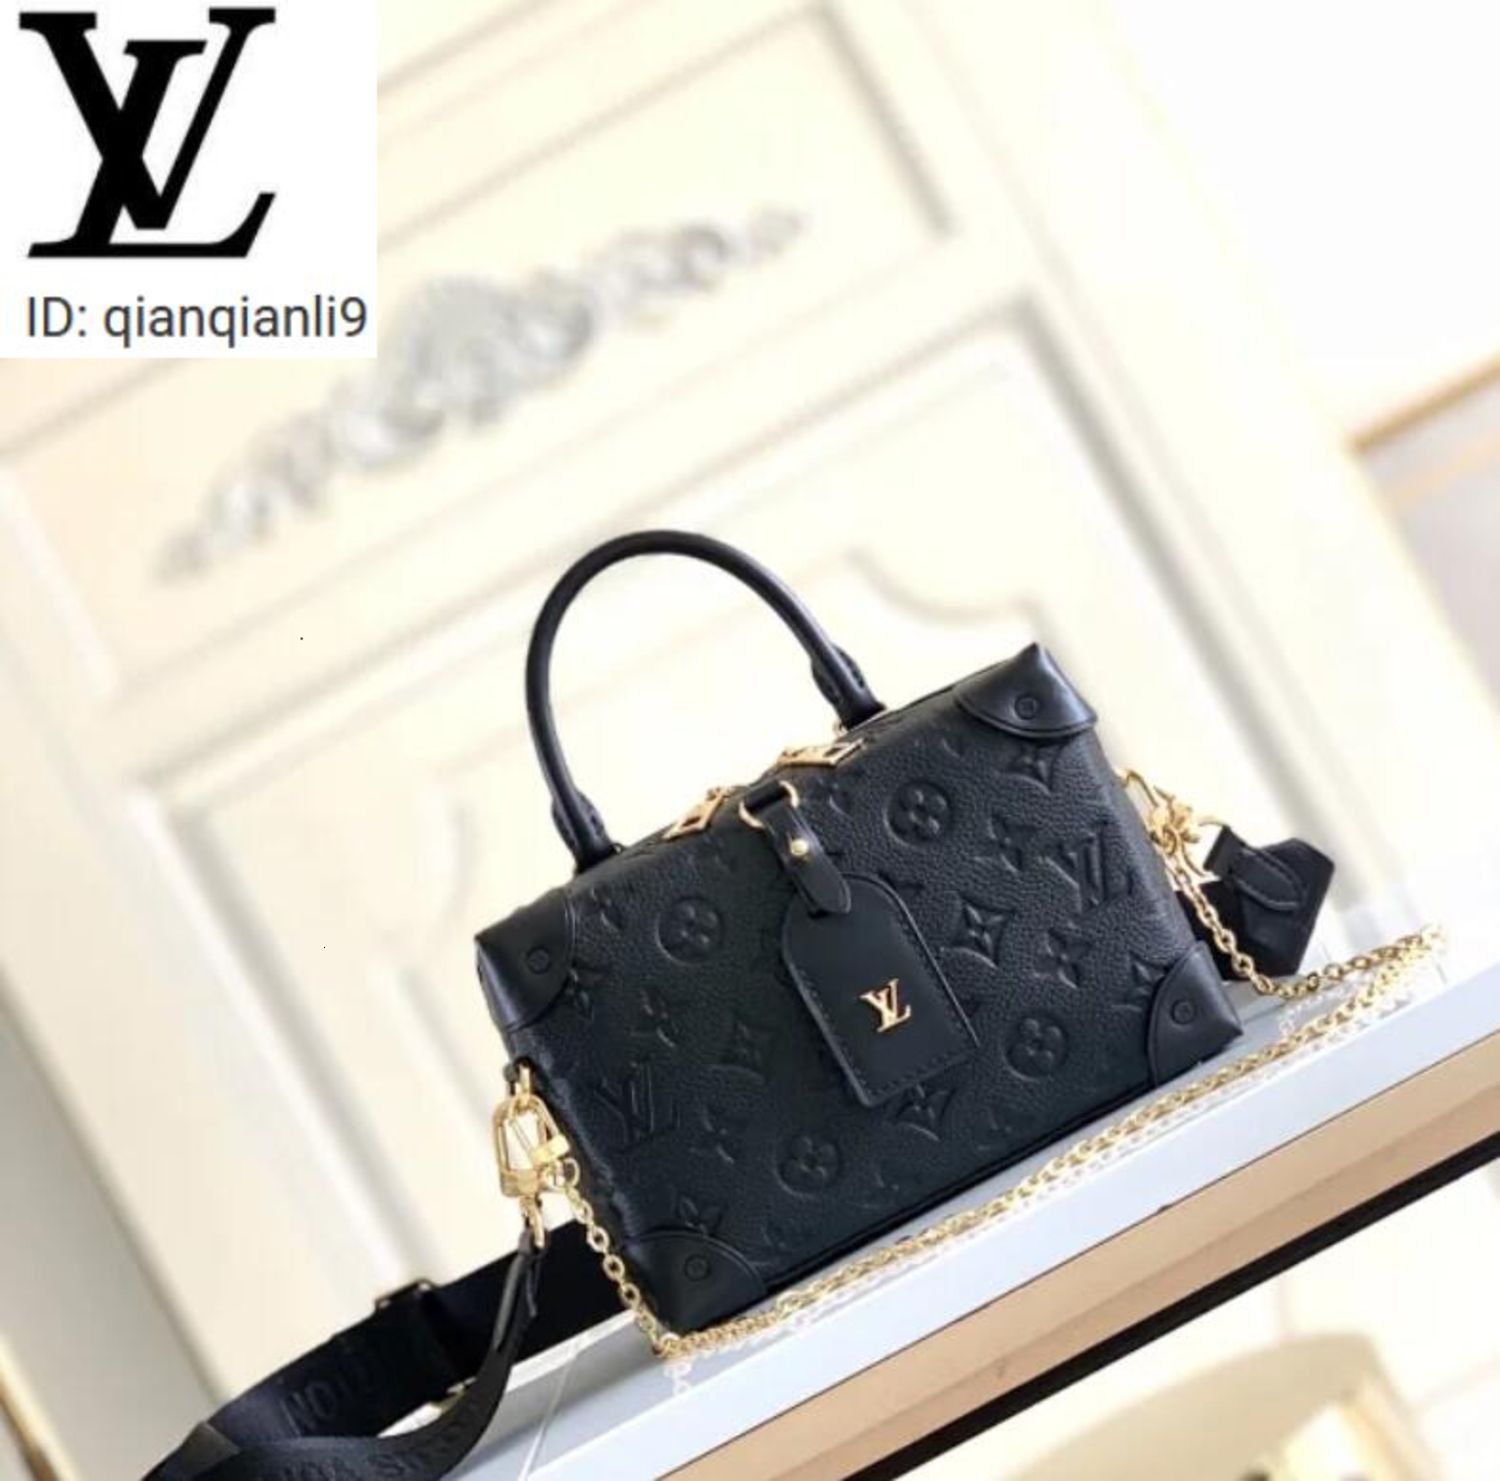 M45393 Petite Malle Souple Retro Square Box Fashion Trend Female Handbags  Shoulder Bags Totes Bag Clutches Evening From Qianqianli9, $362.7